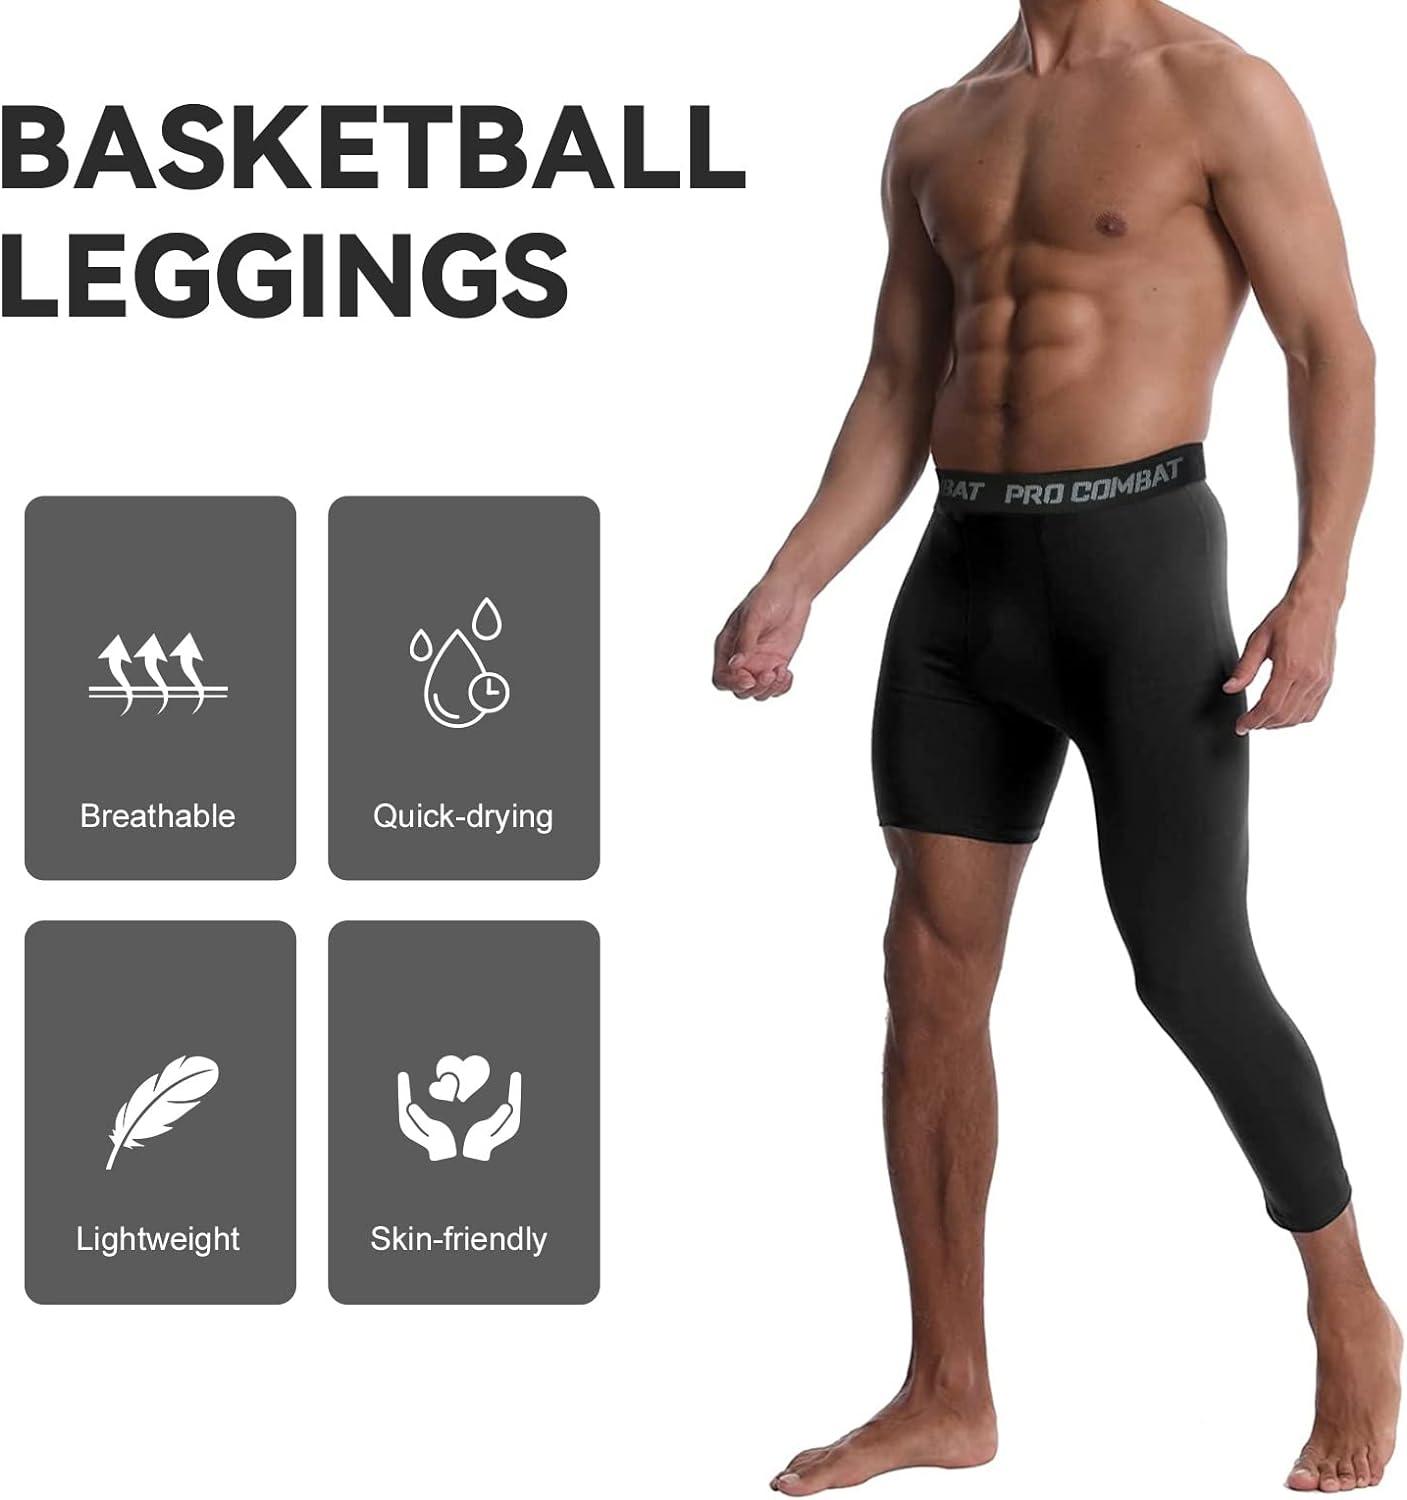 We Ball Sports Athletic Men's Single Leg Sports Tights | One Leg  Compression Base Layer Leggings for Men (3/4, White)